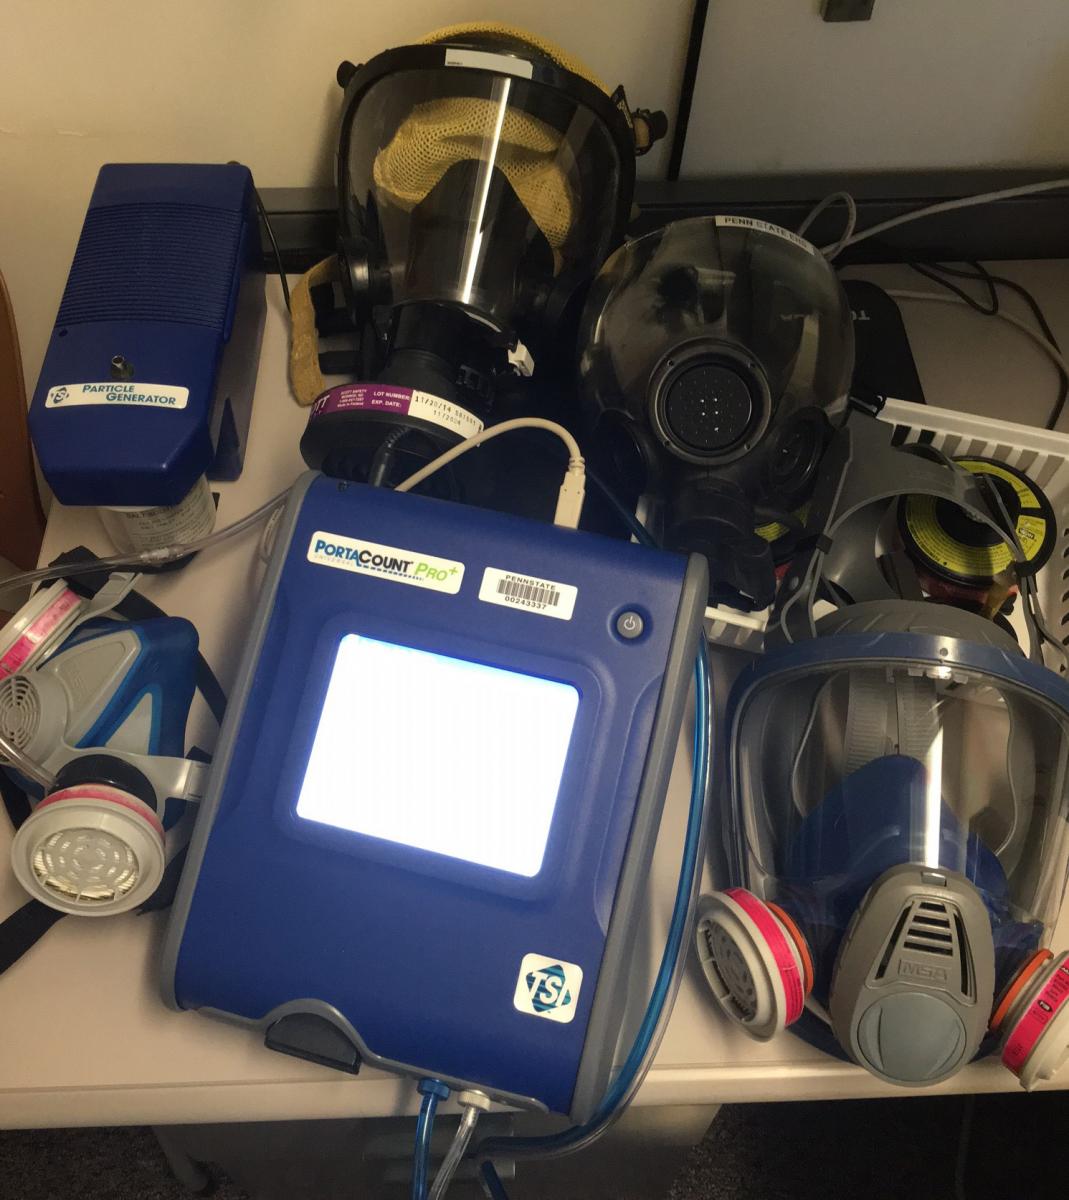 Respirators and testing equipment